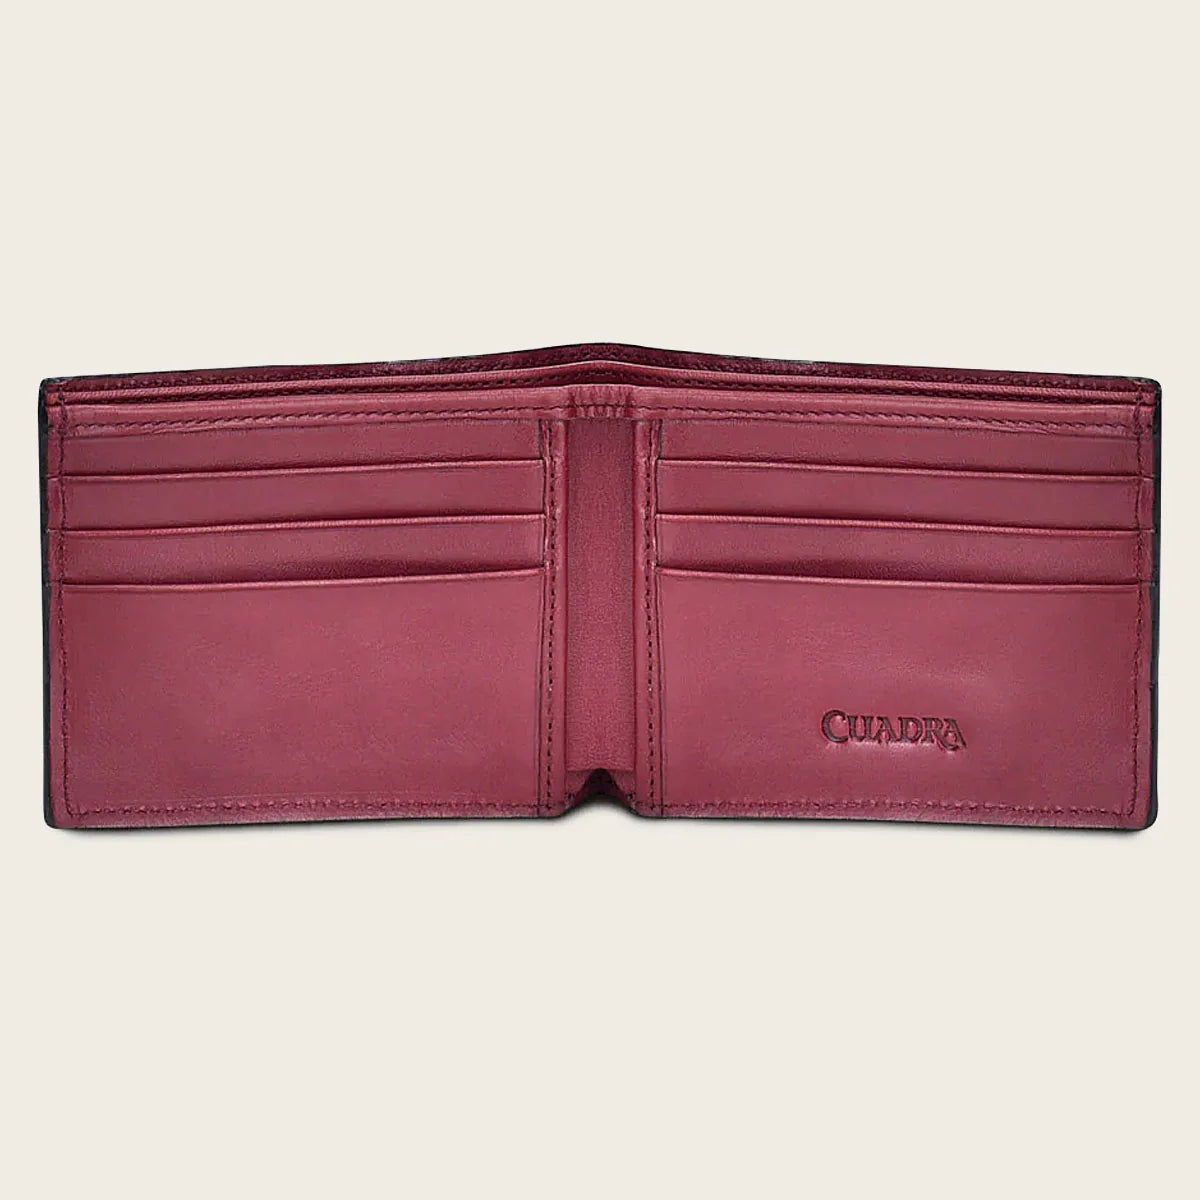 Cuadra wallet